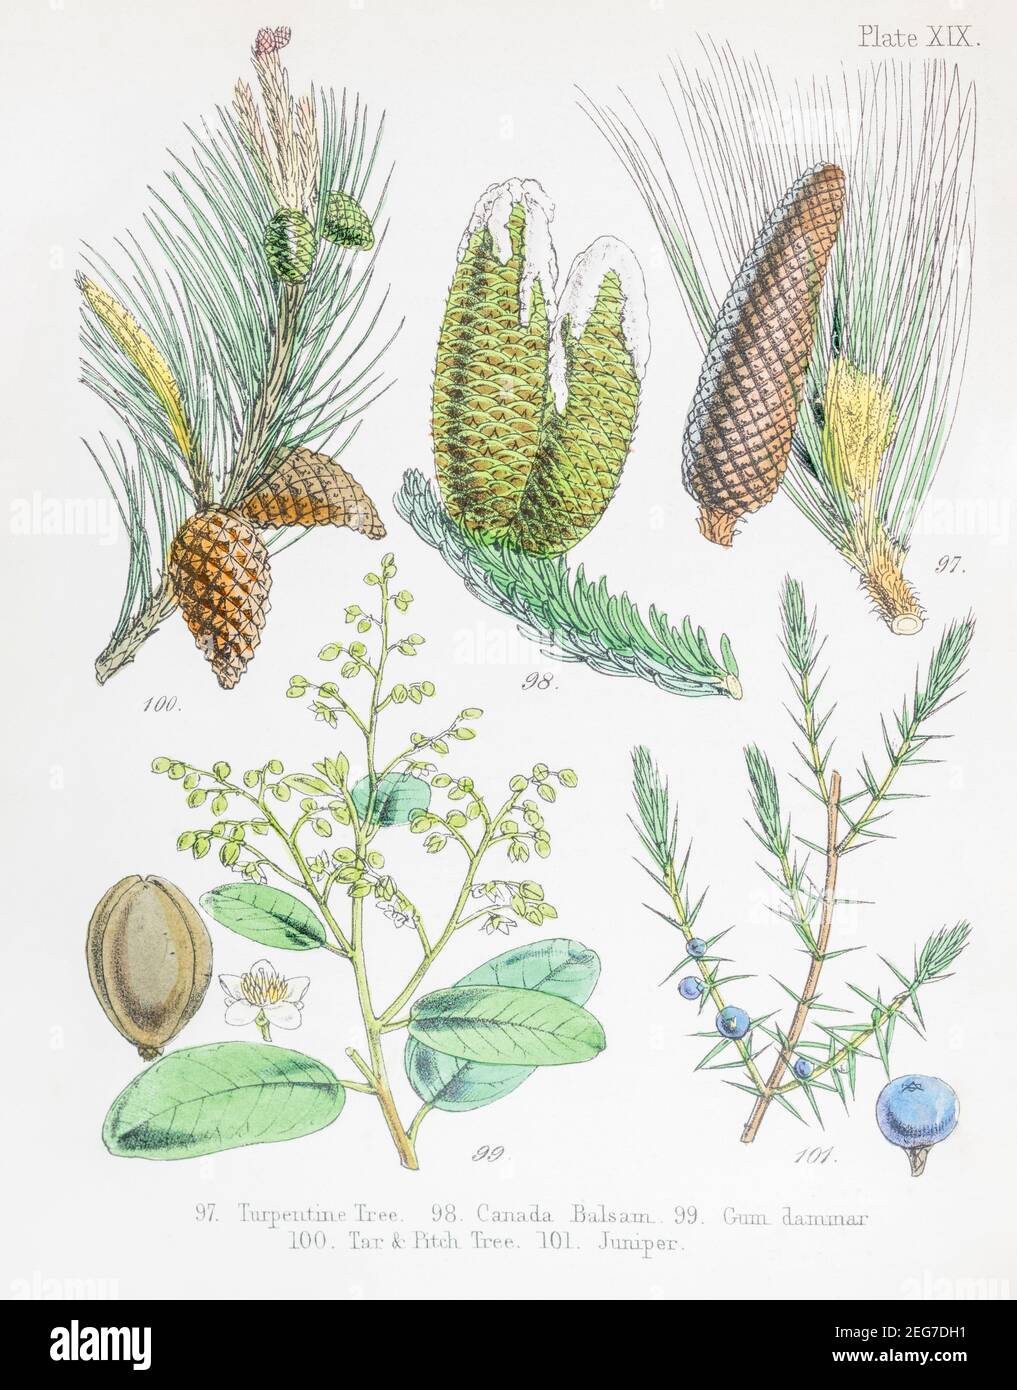 19th c. hand-painted Victorian botanical illustration of Turpentine tree, Canada Balsam, Gum dammar / Agathis australis, Tar & Pitch tree & Juniper. Stock Photo